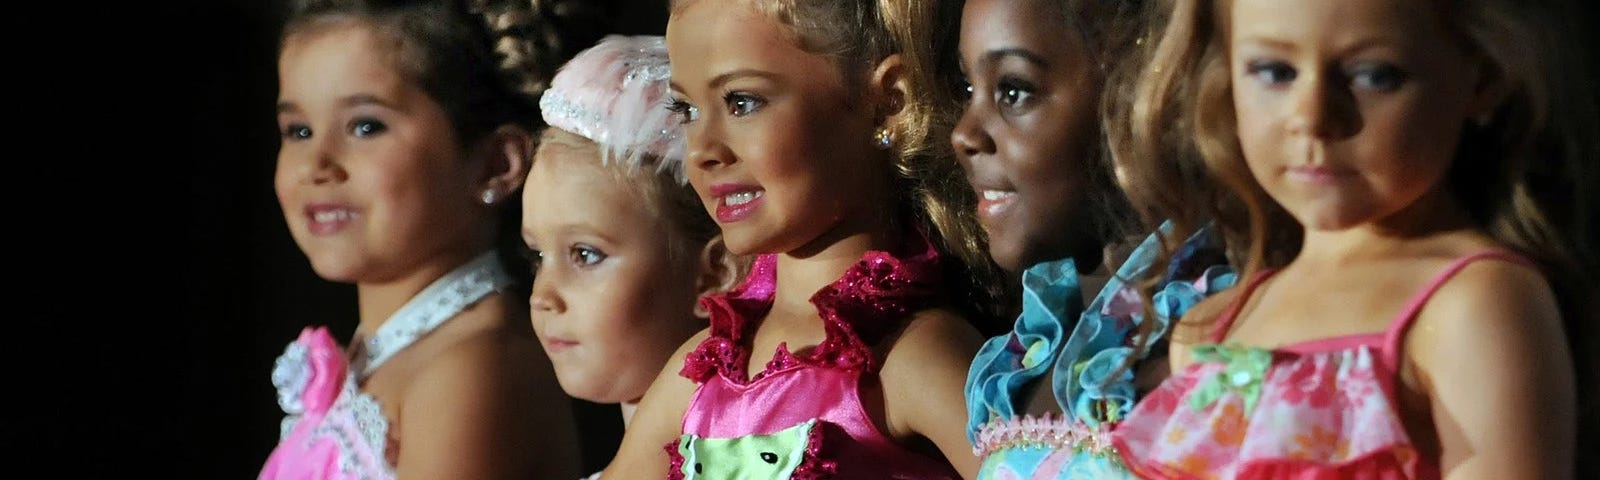 A child beauty pageant. Credits: Smithsonian magazine